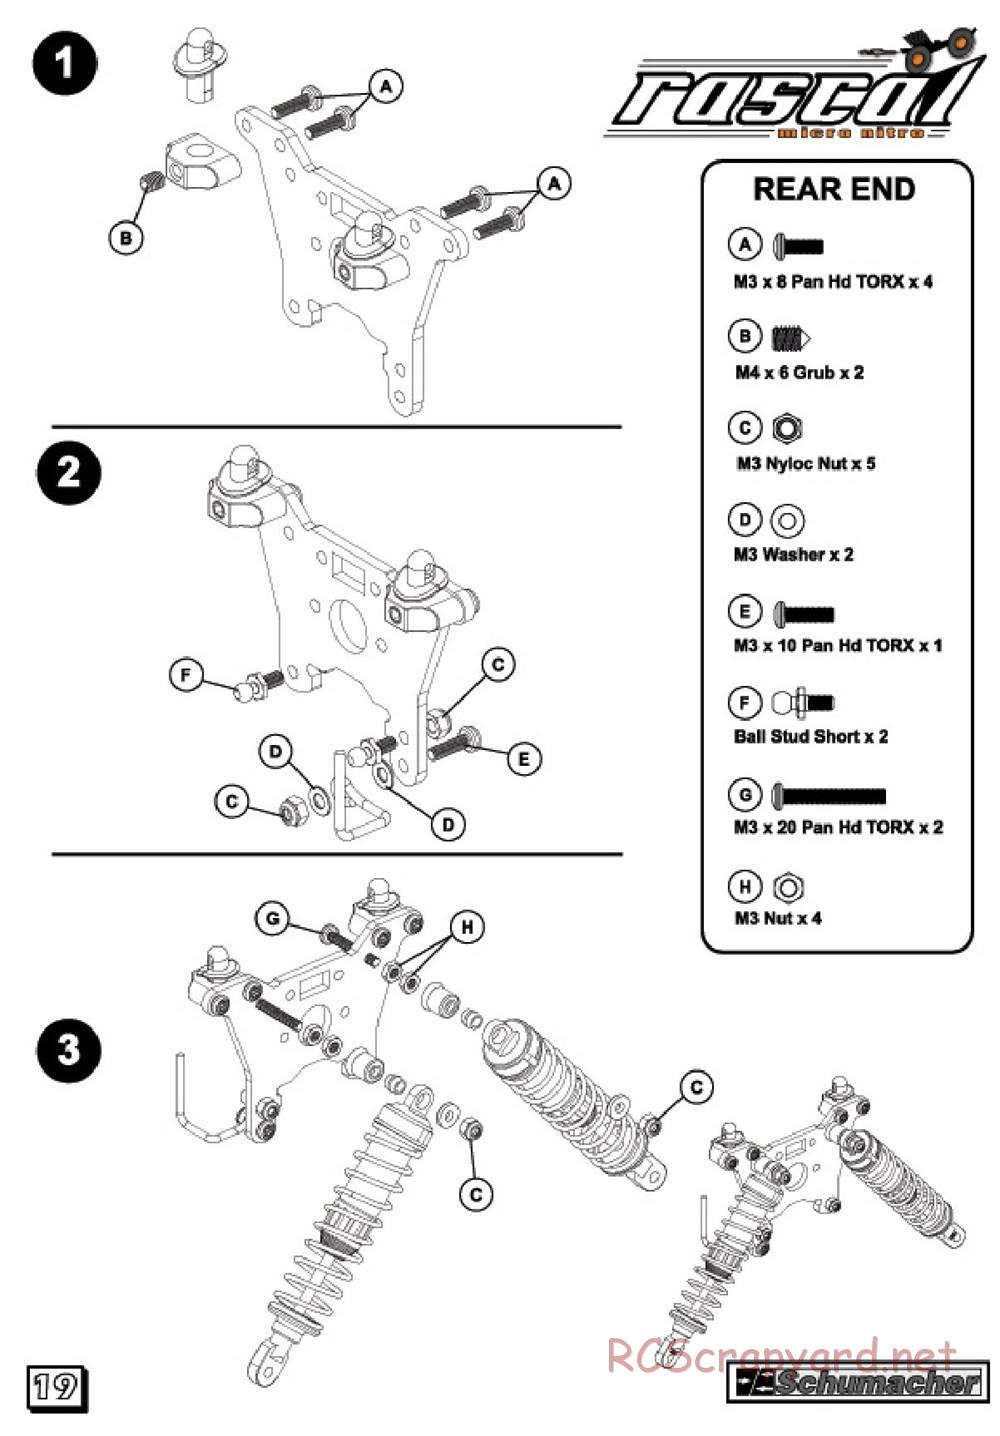 Schumacher - Rascal Micro Nitro - Manual - Page 21